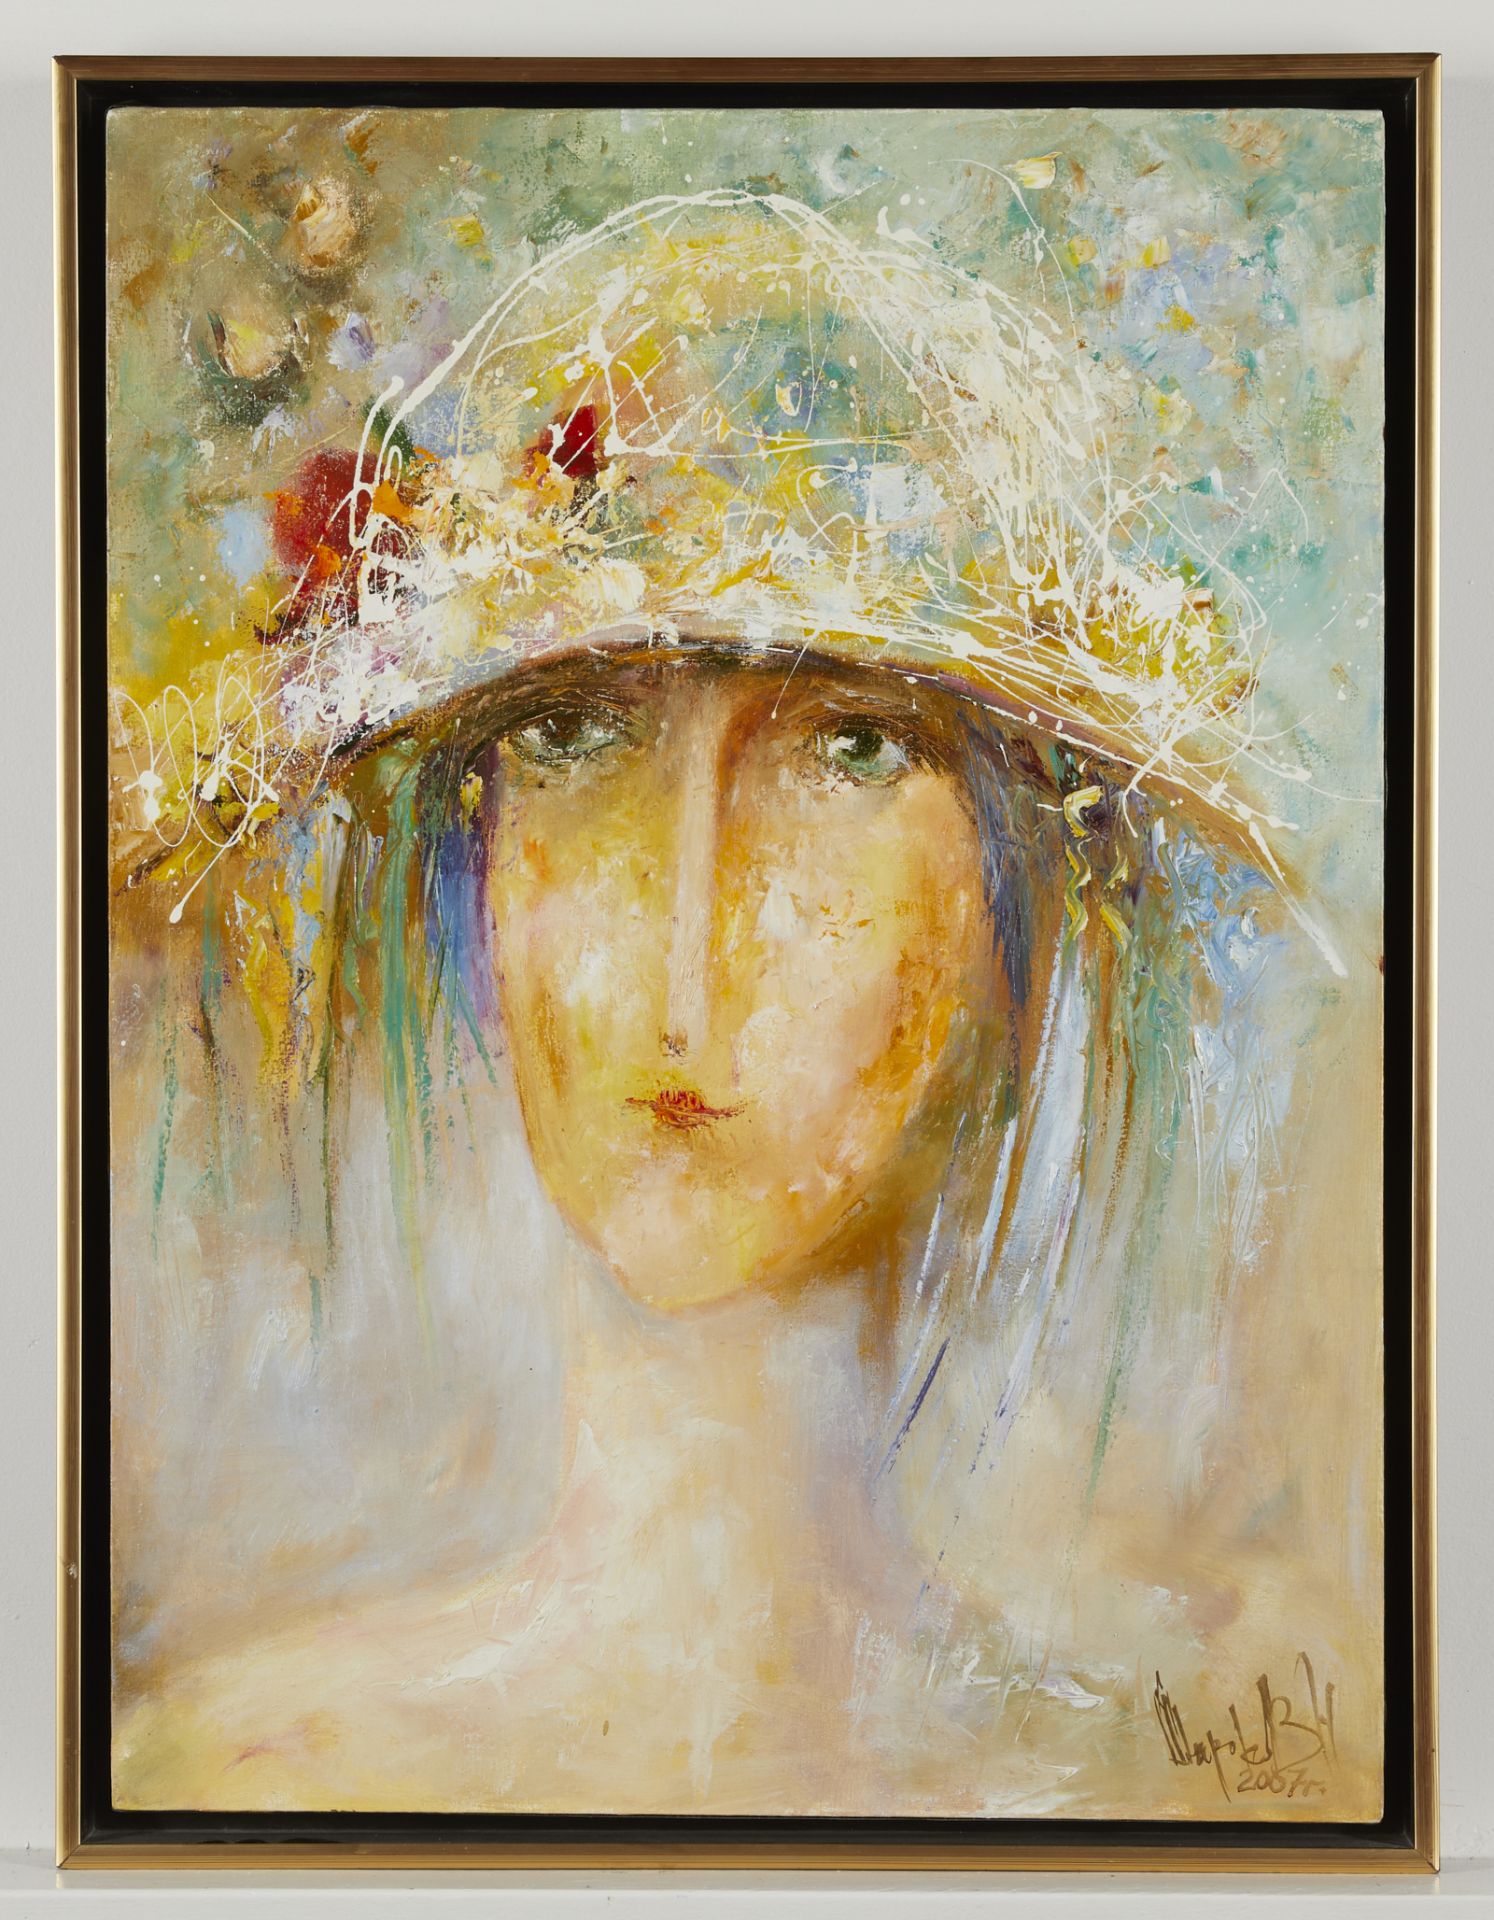 Nikolas Shirokov "Portrait" Oil Painting 2007 - Image 3 of 8